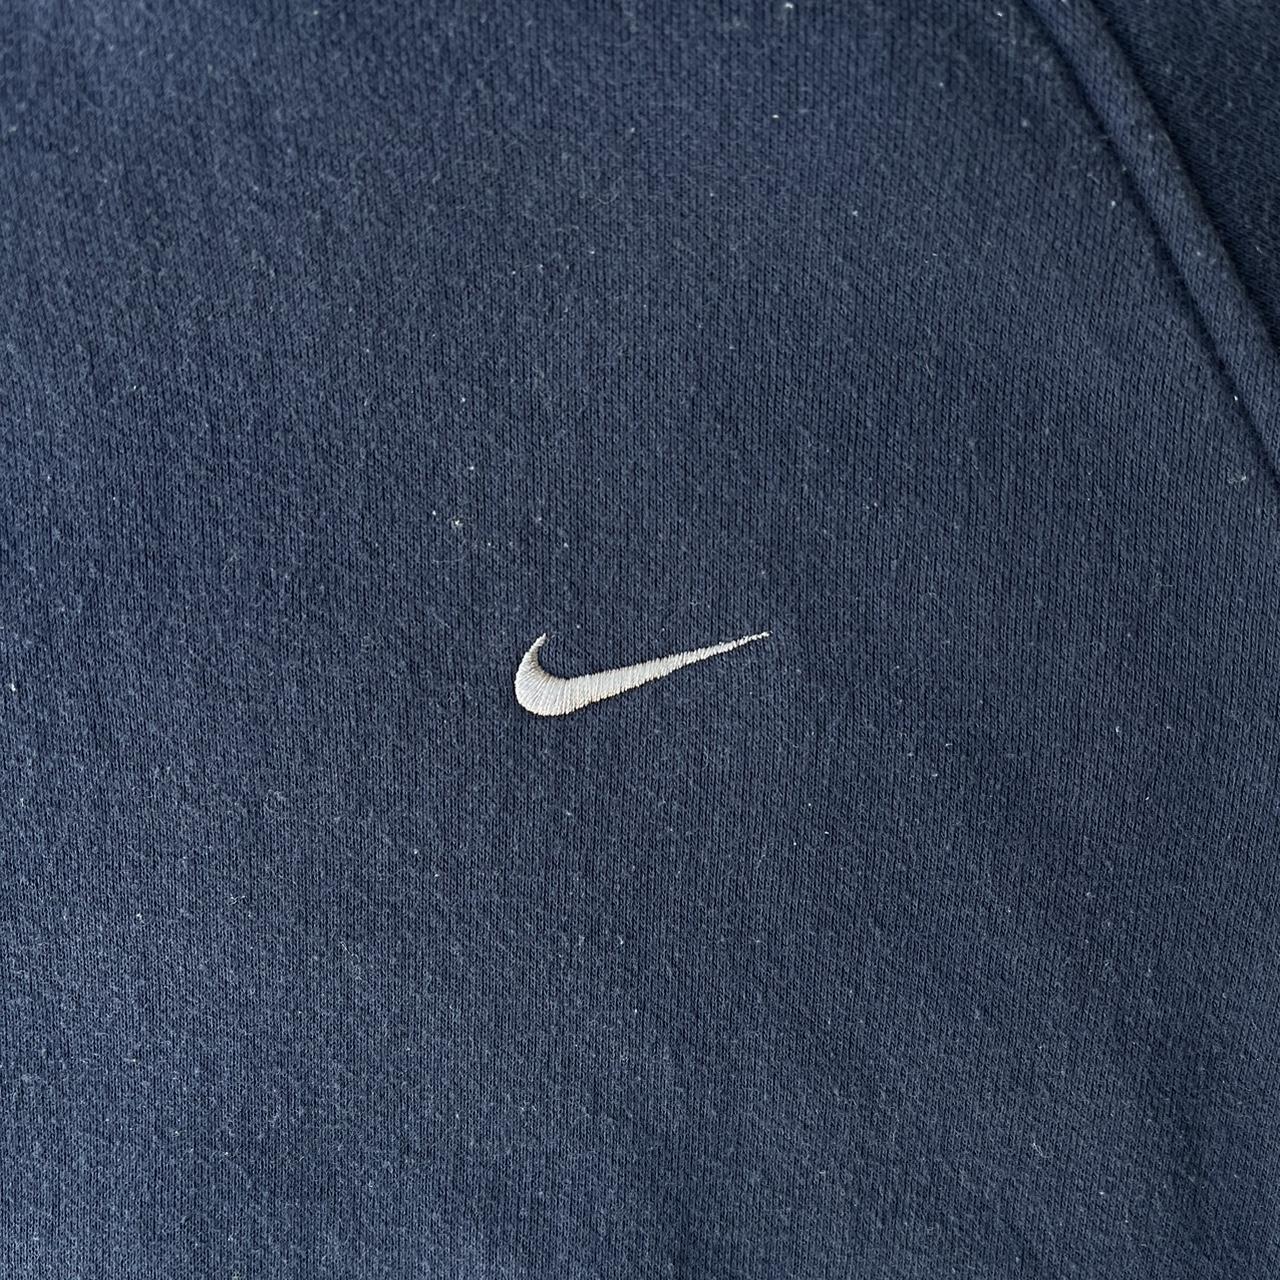 00s Nike Sweatshirt Sun faded navy blue with white... - Depop